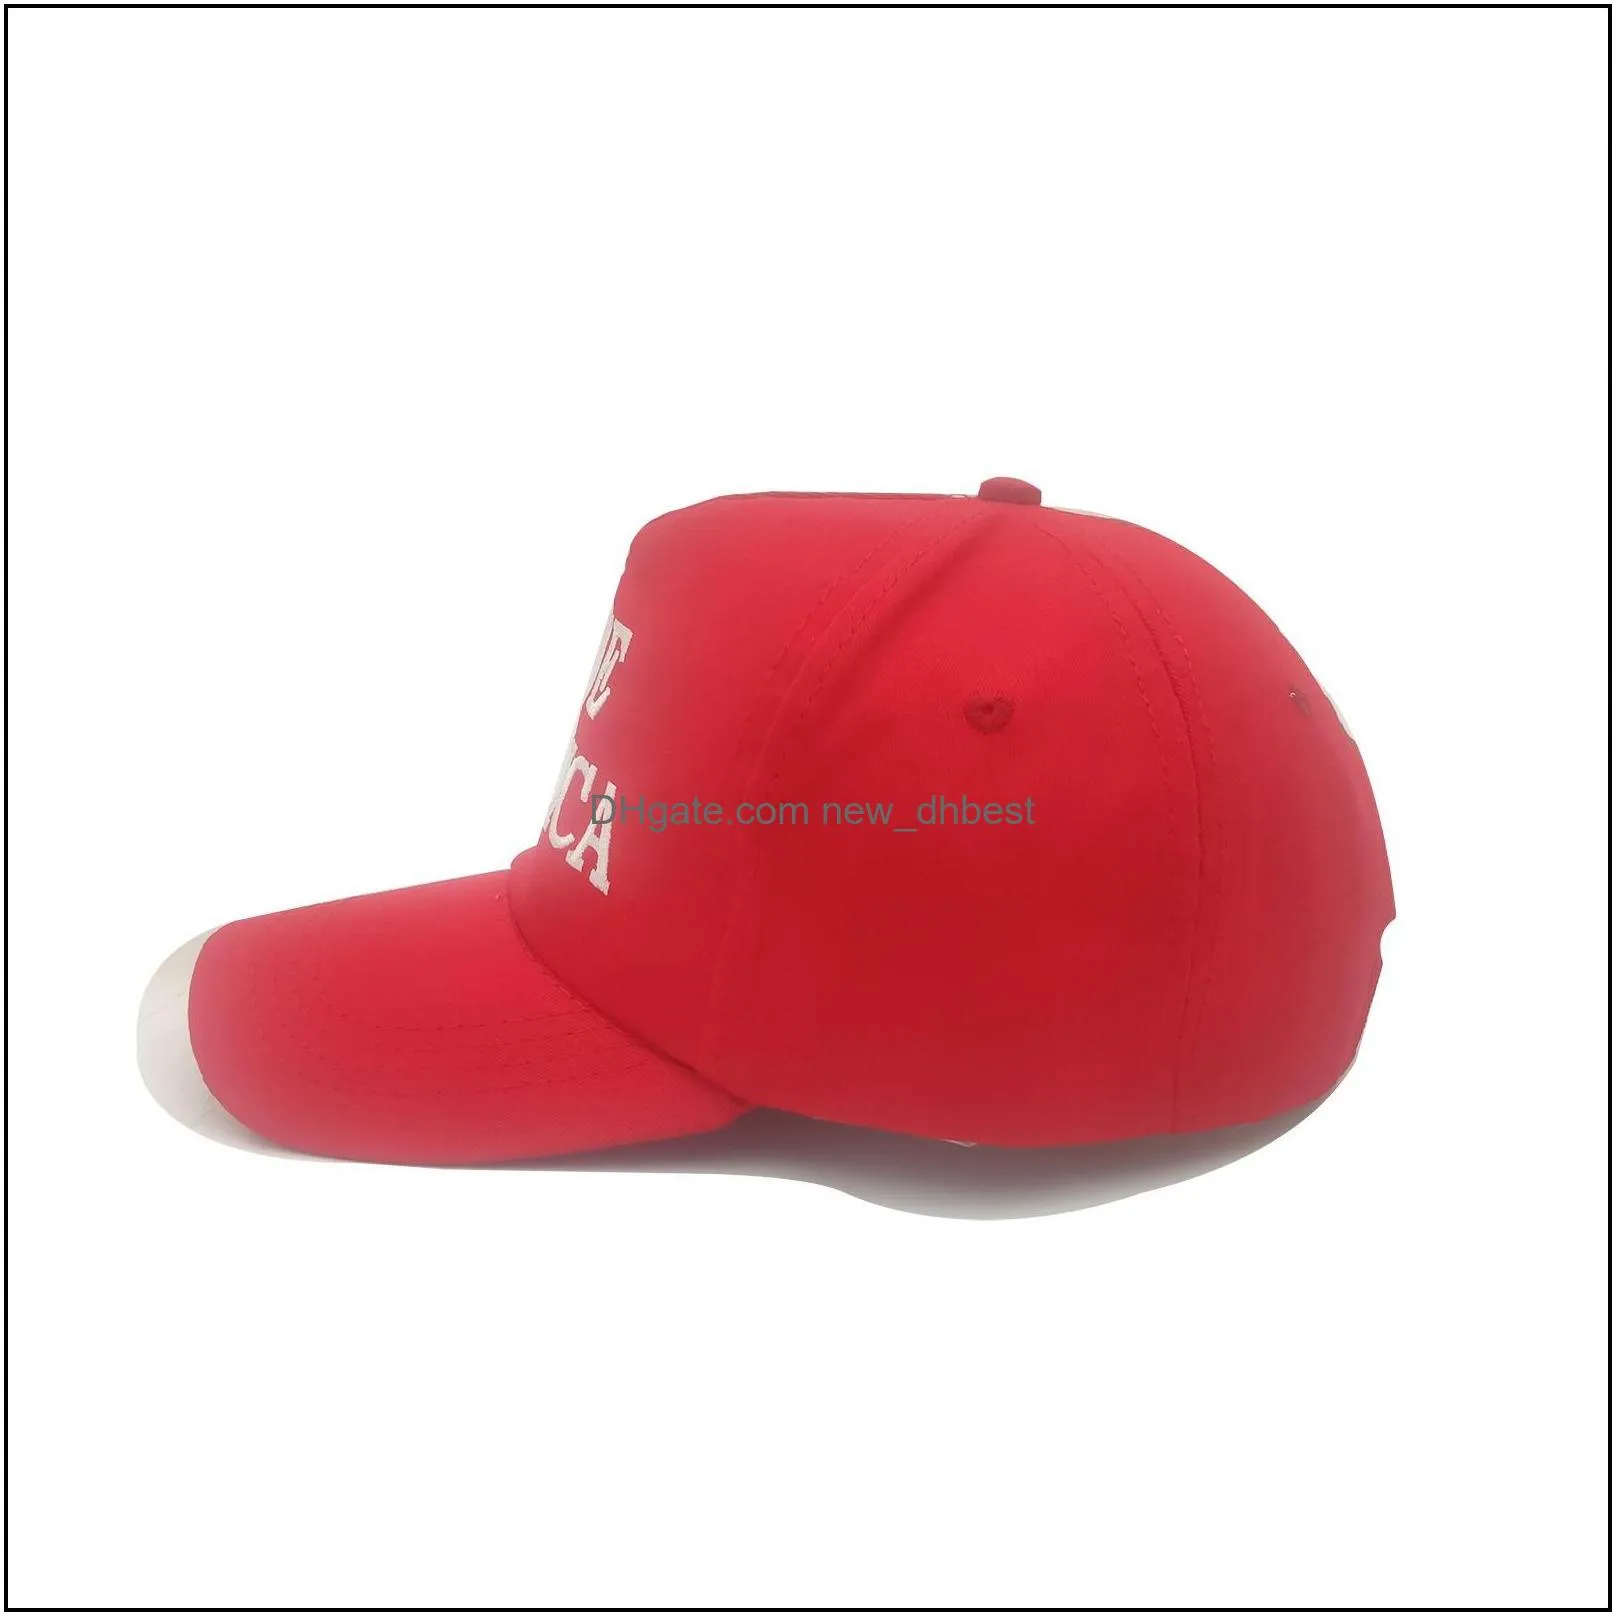 save america embroidery hat trump 2024 baseball cotton cap